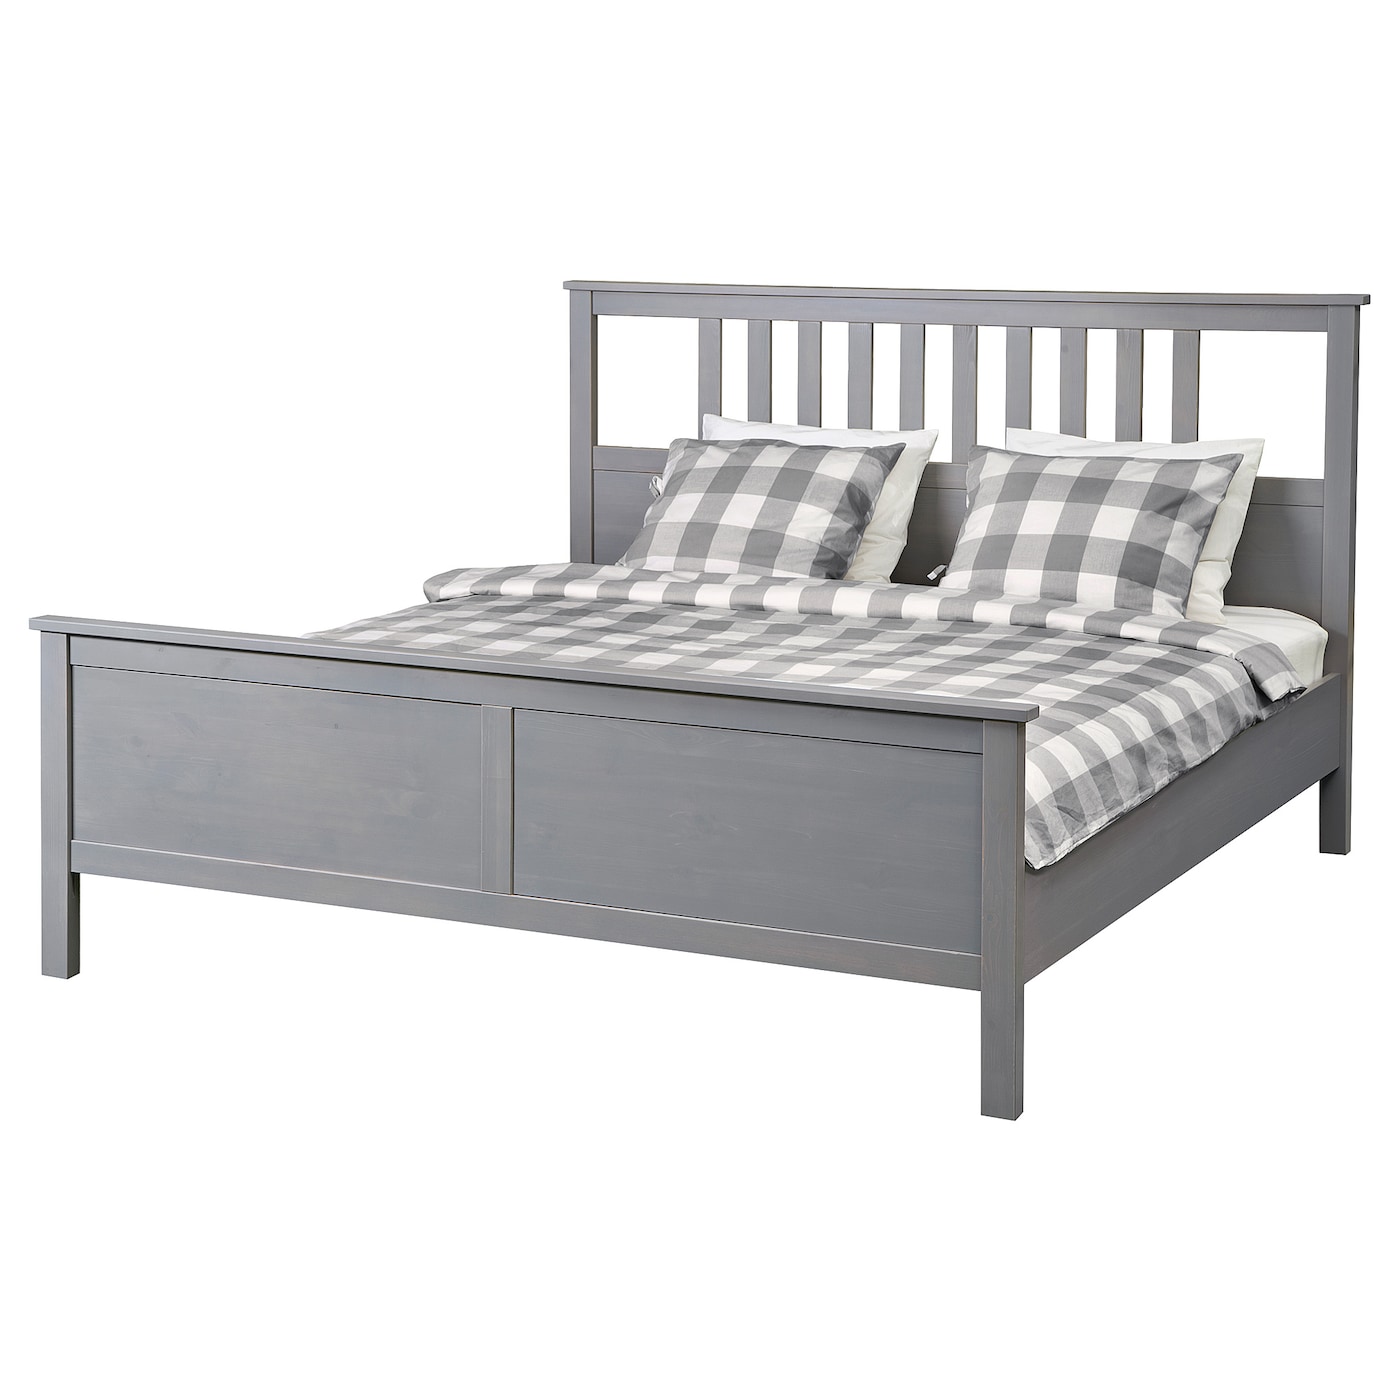 Каркас кровати - IKEA HEMNES, 200х140 см, серый, ХЕМНЭС ИКЕА